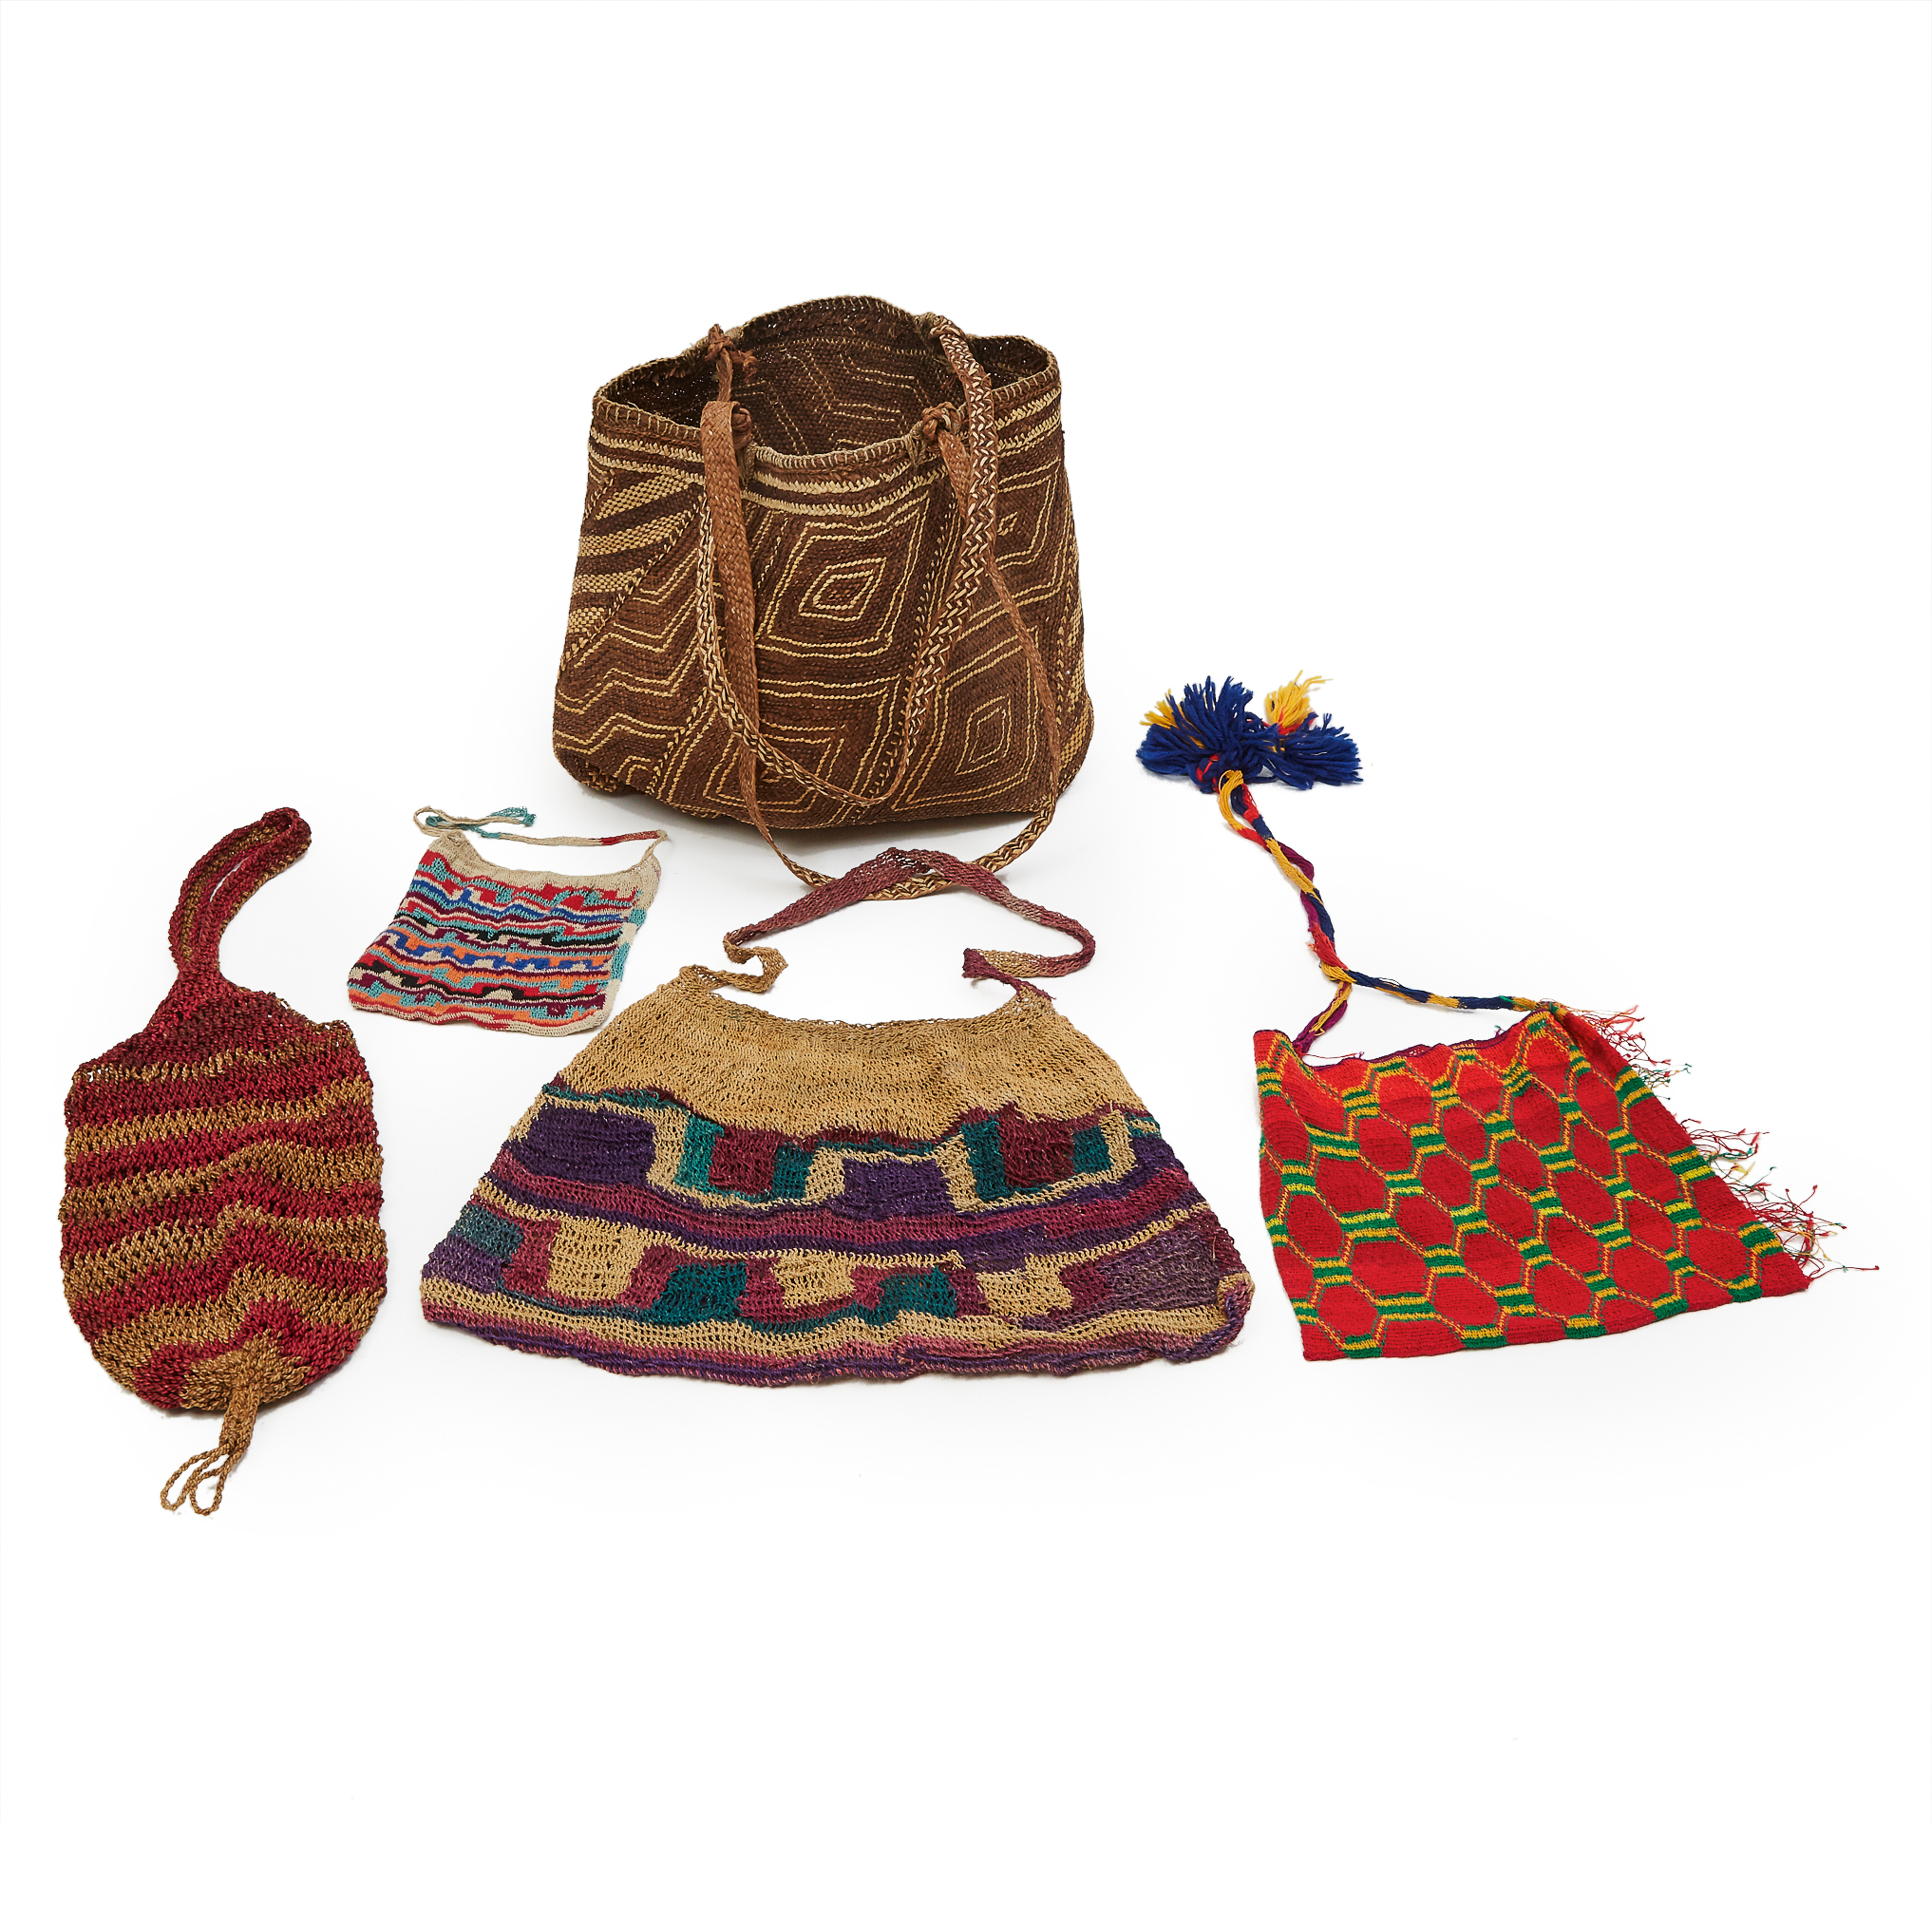 Four Woven Bilum Bags together with a woven raffia bag, Papua New Guinea